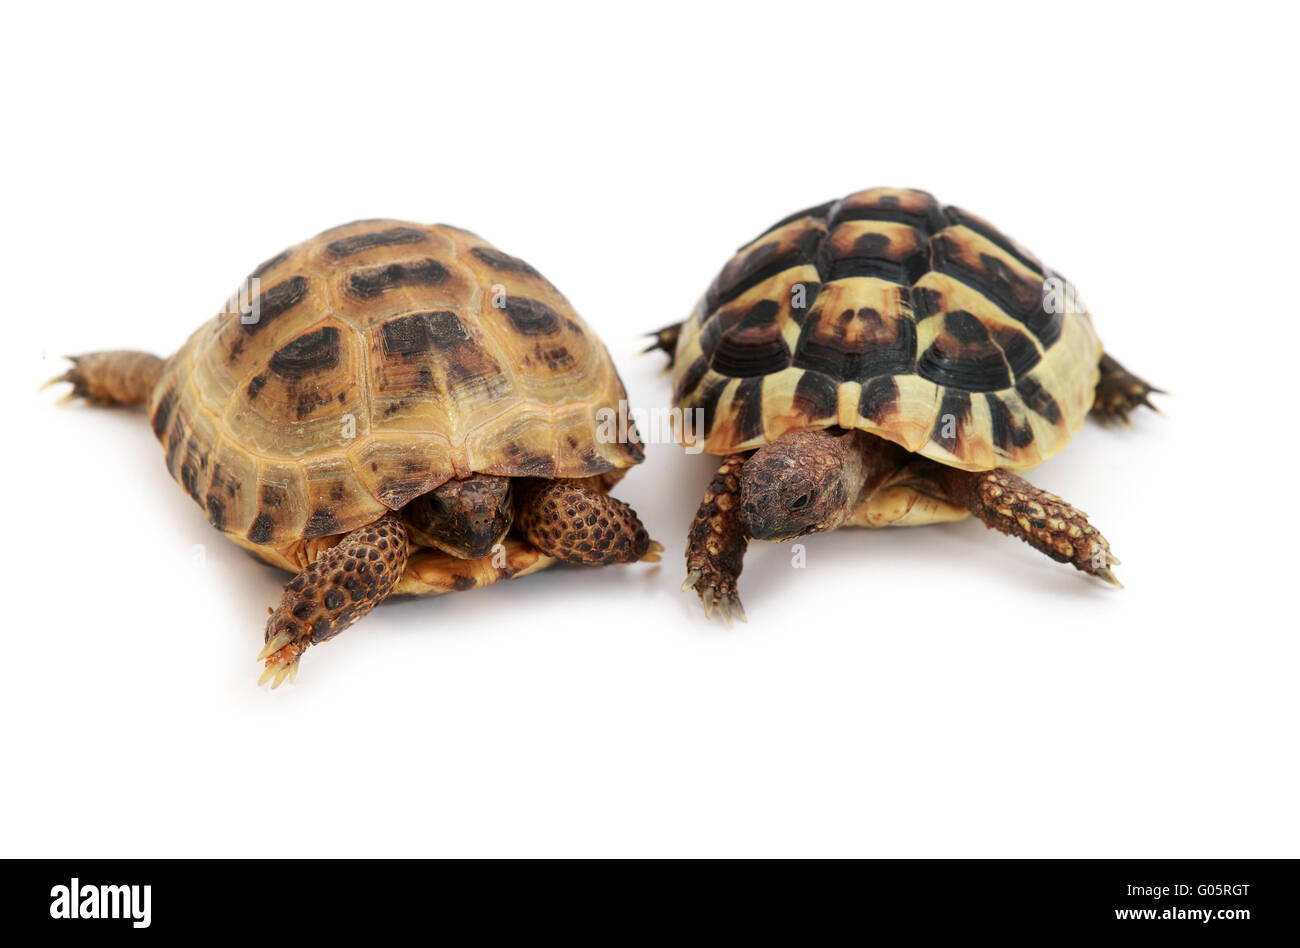 Russian tortoise and Hermann's tortoise on white Stock Photo